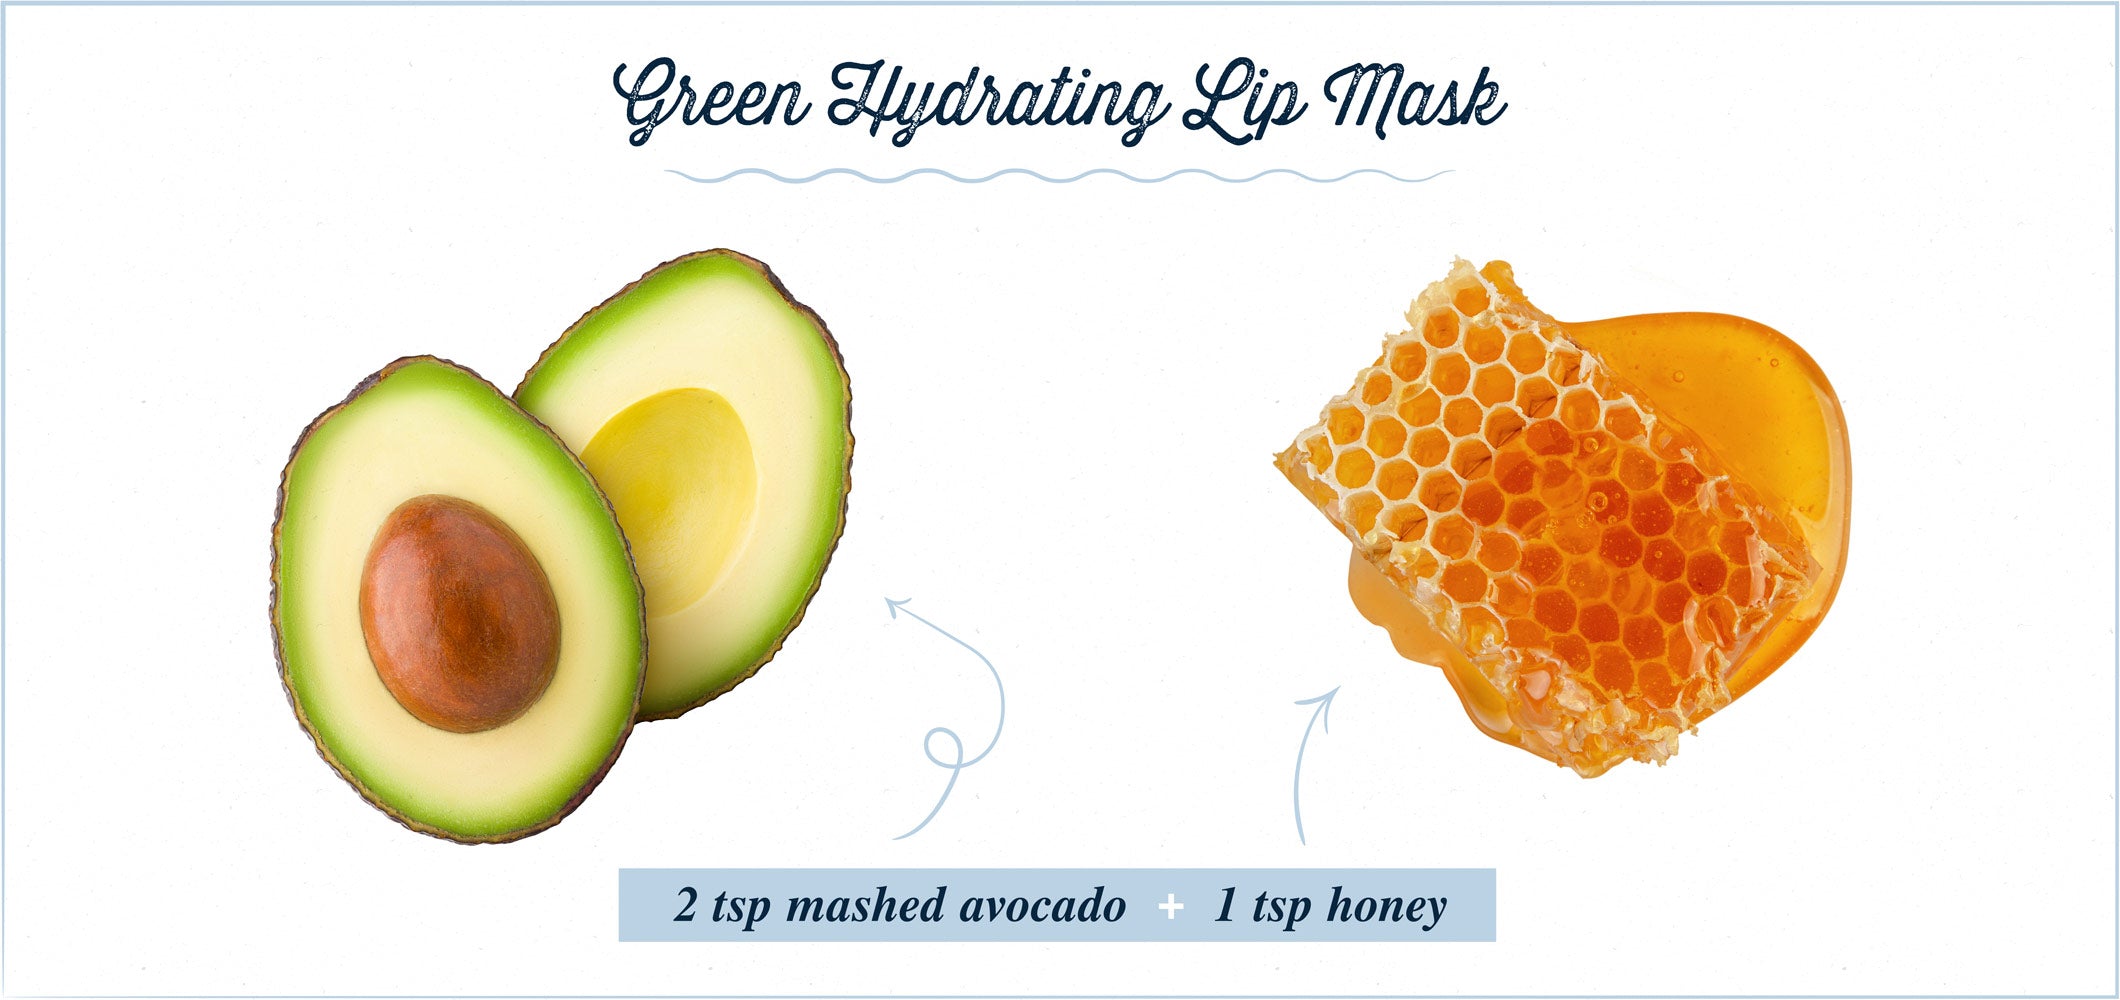 green hydrating lip mask ingredients 